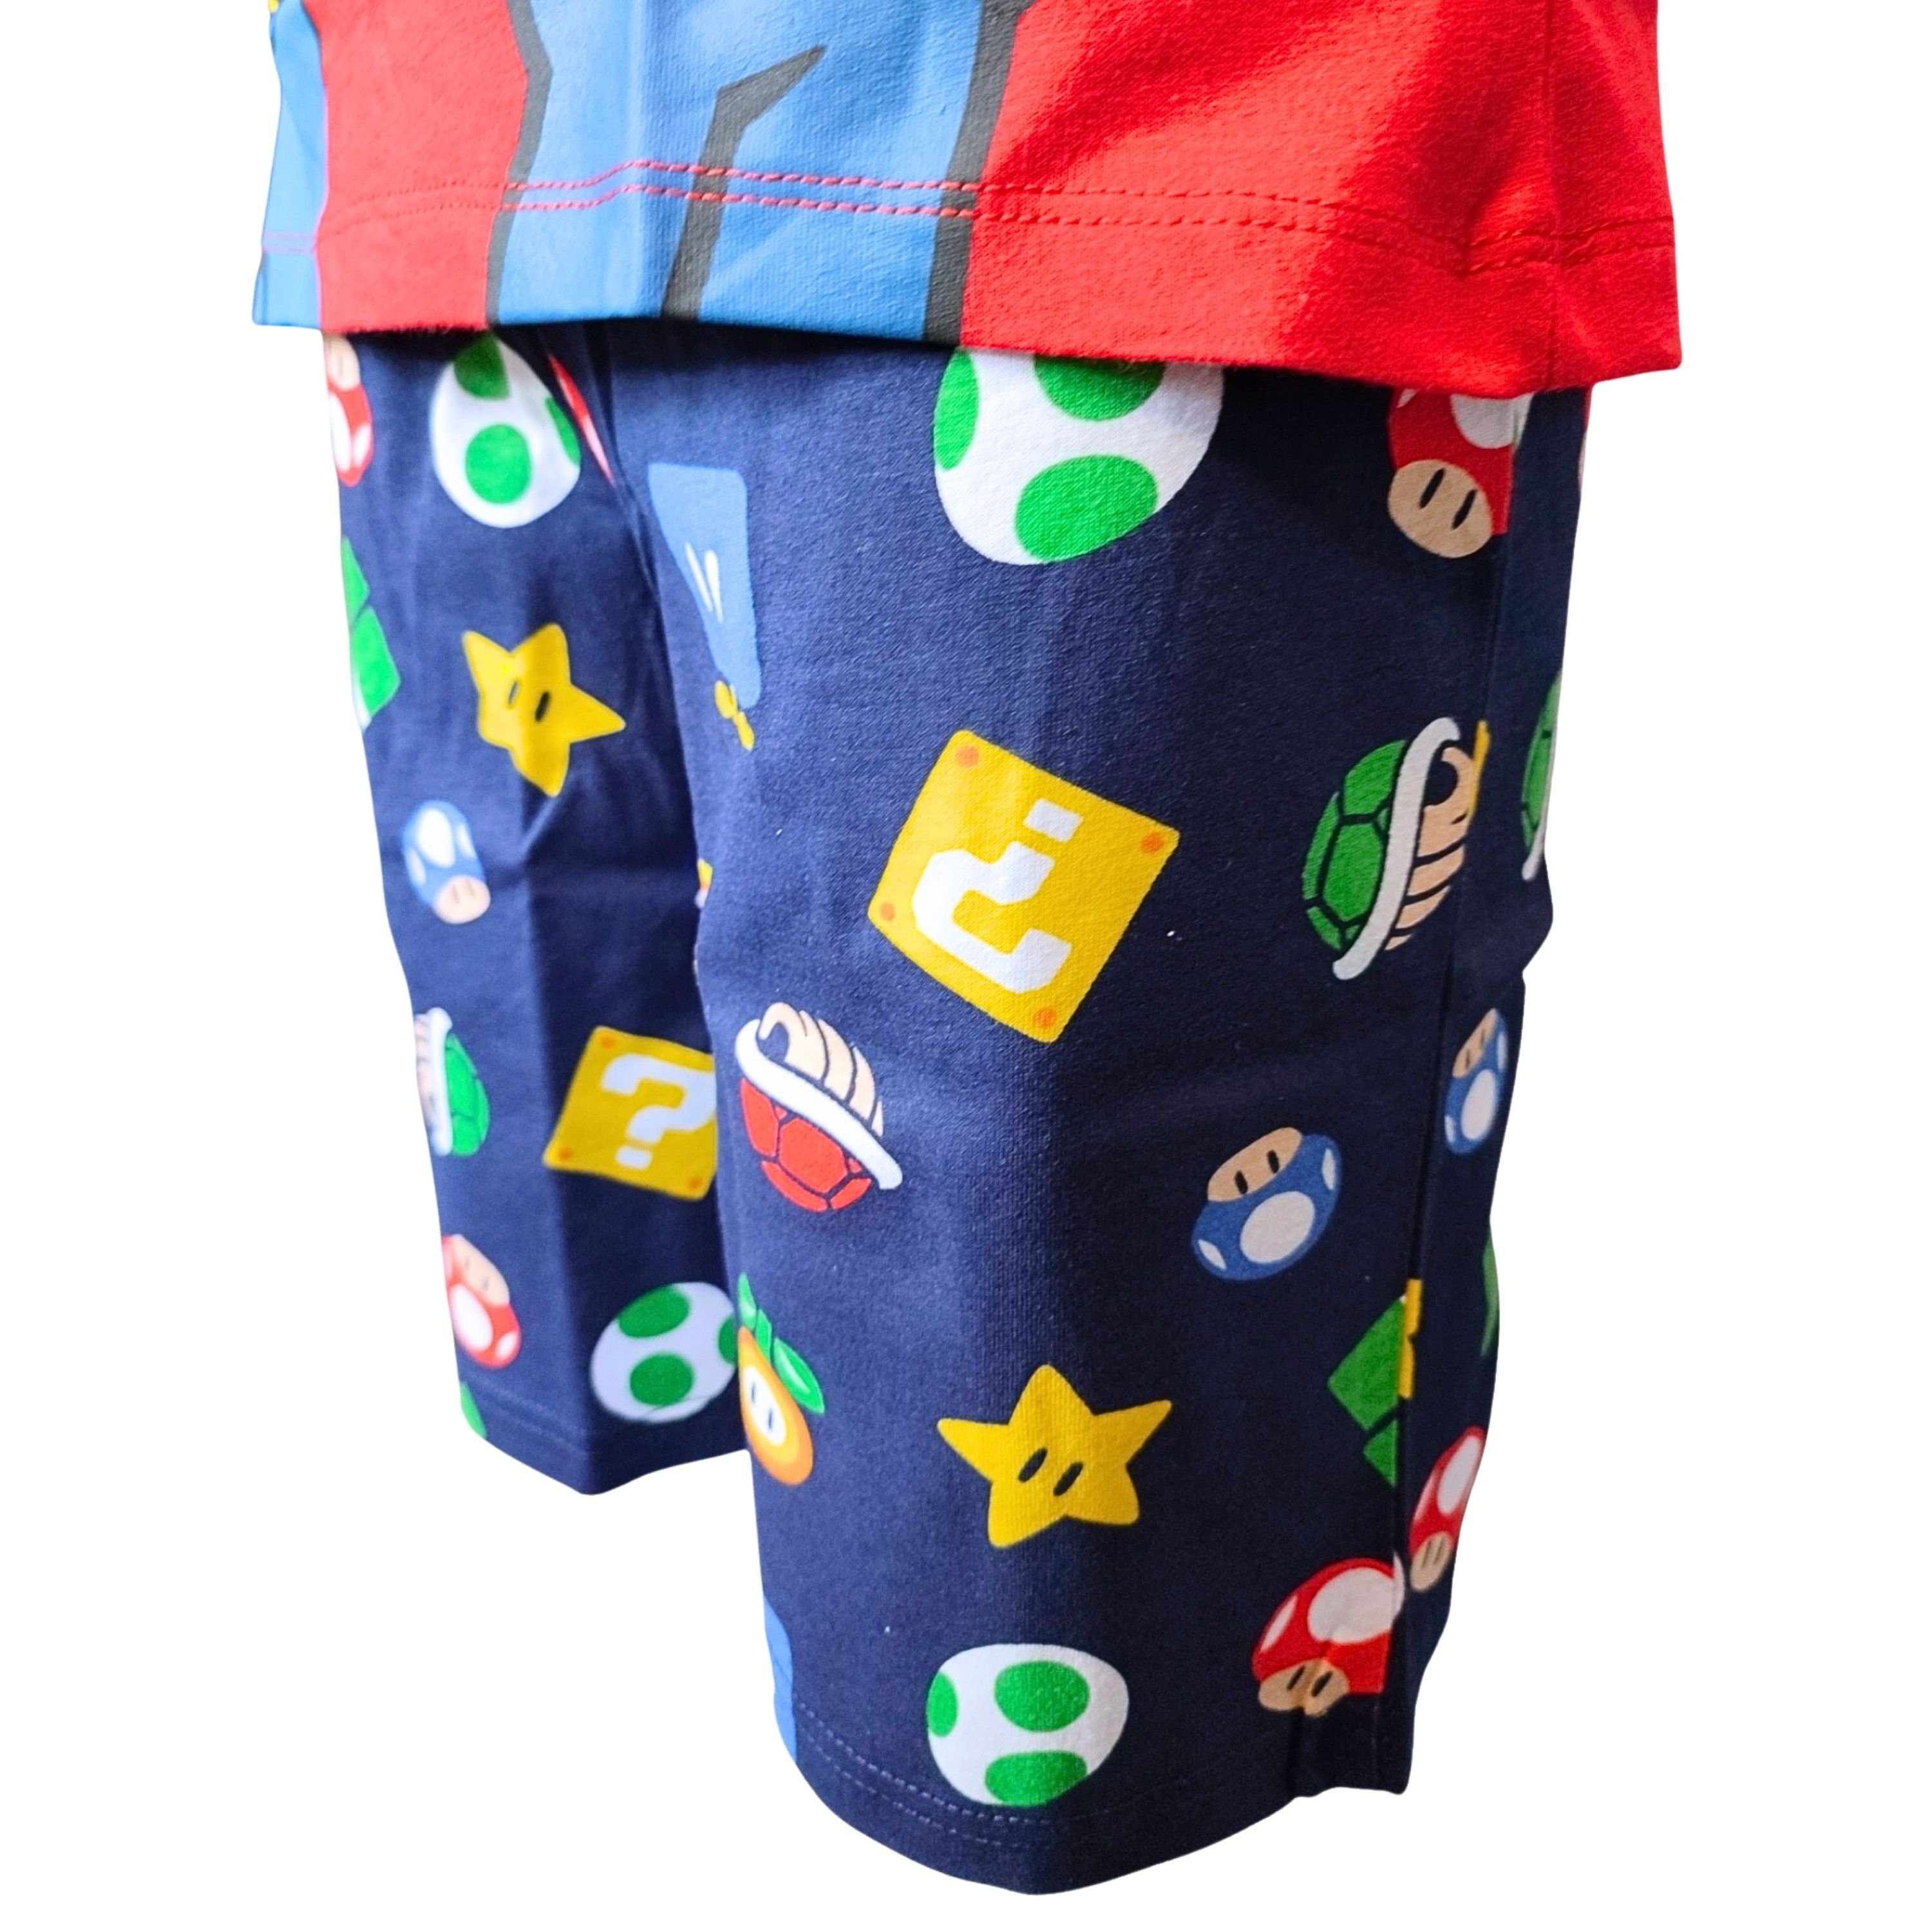 Mario tlg) kurz Jungen - Super Rot Pyjama Gr. Mario Shorty 104-140 Schlafanzug (2 Kinder cm & Set Luigi